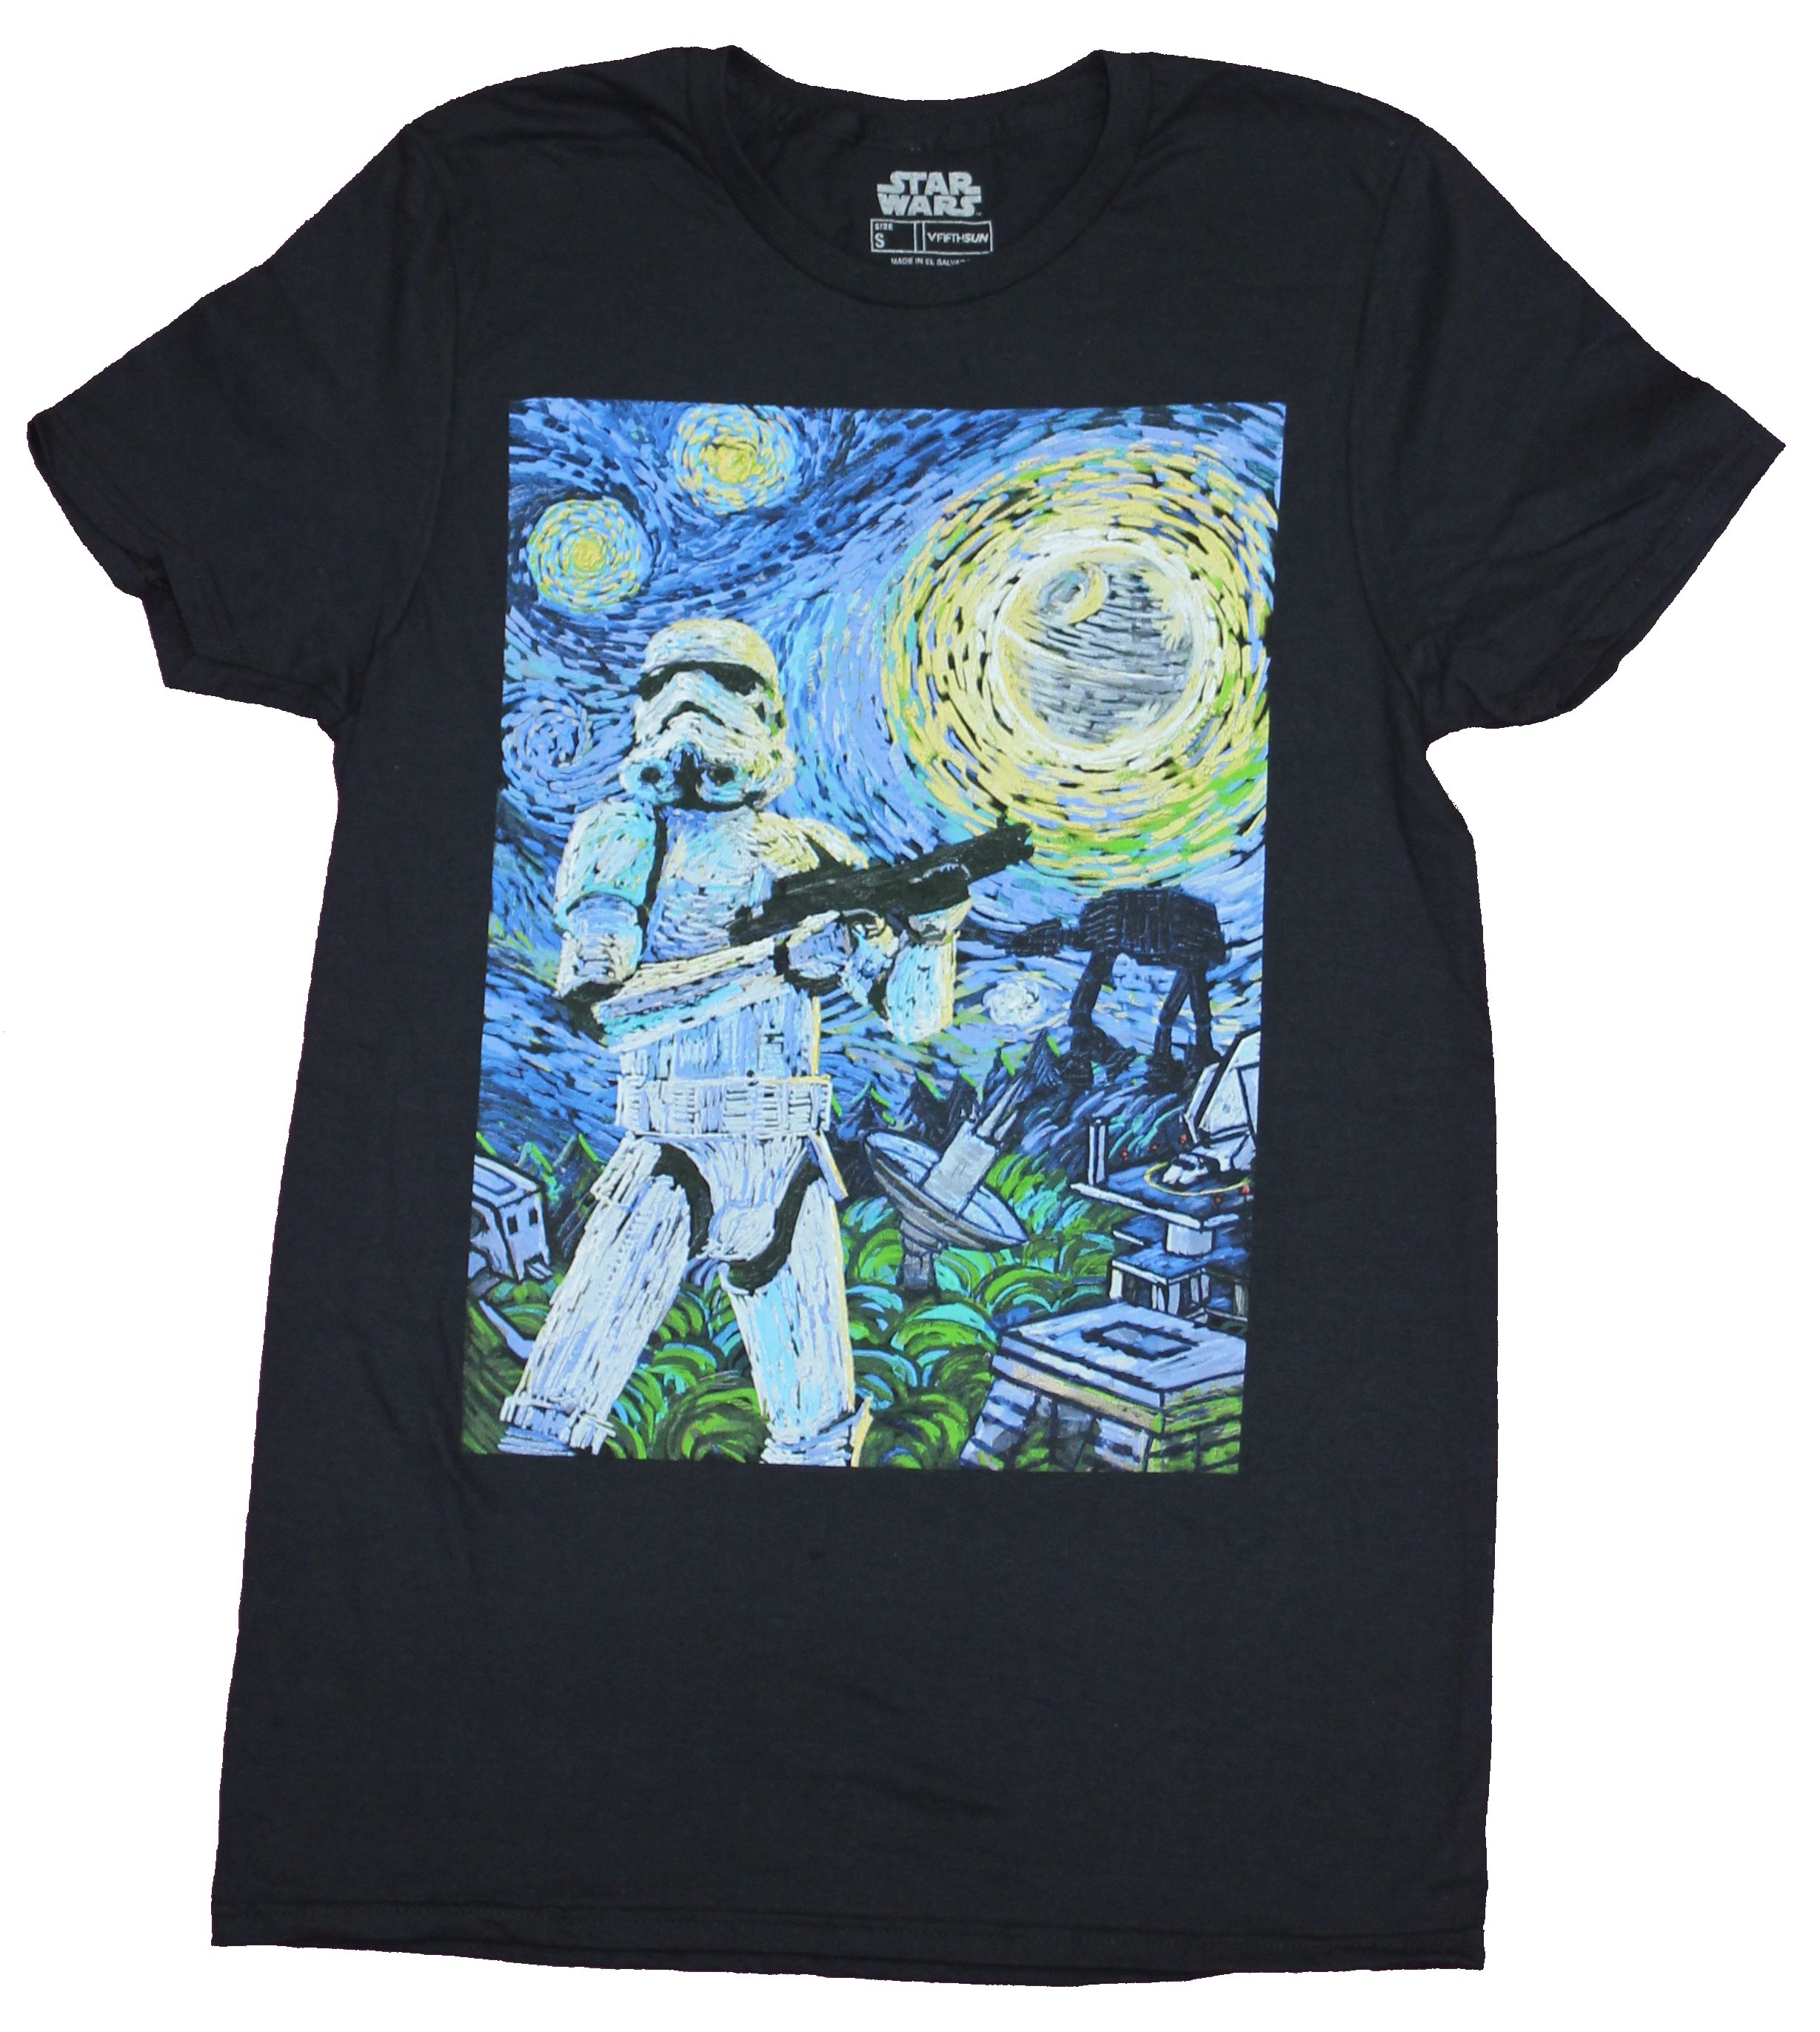 starry night stormtrooper shirt